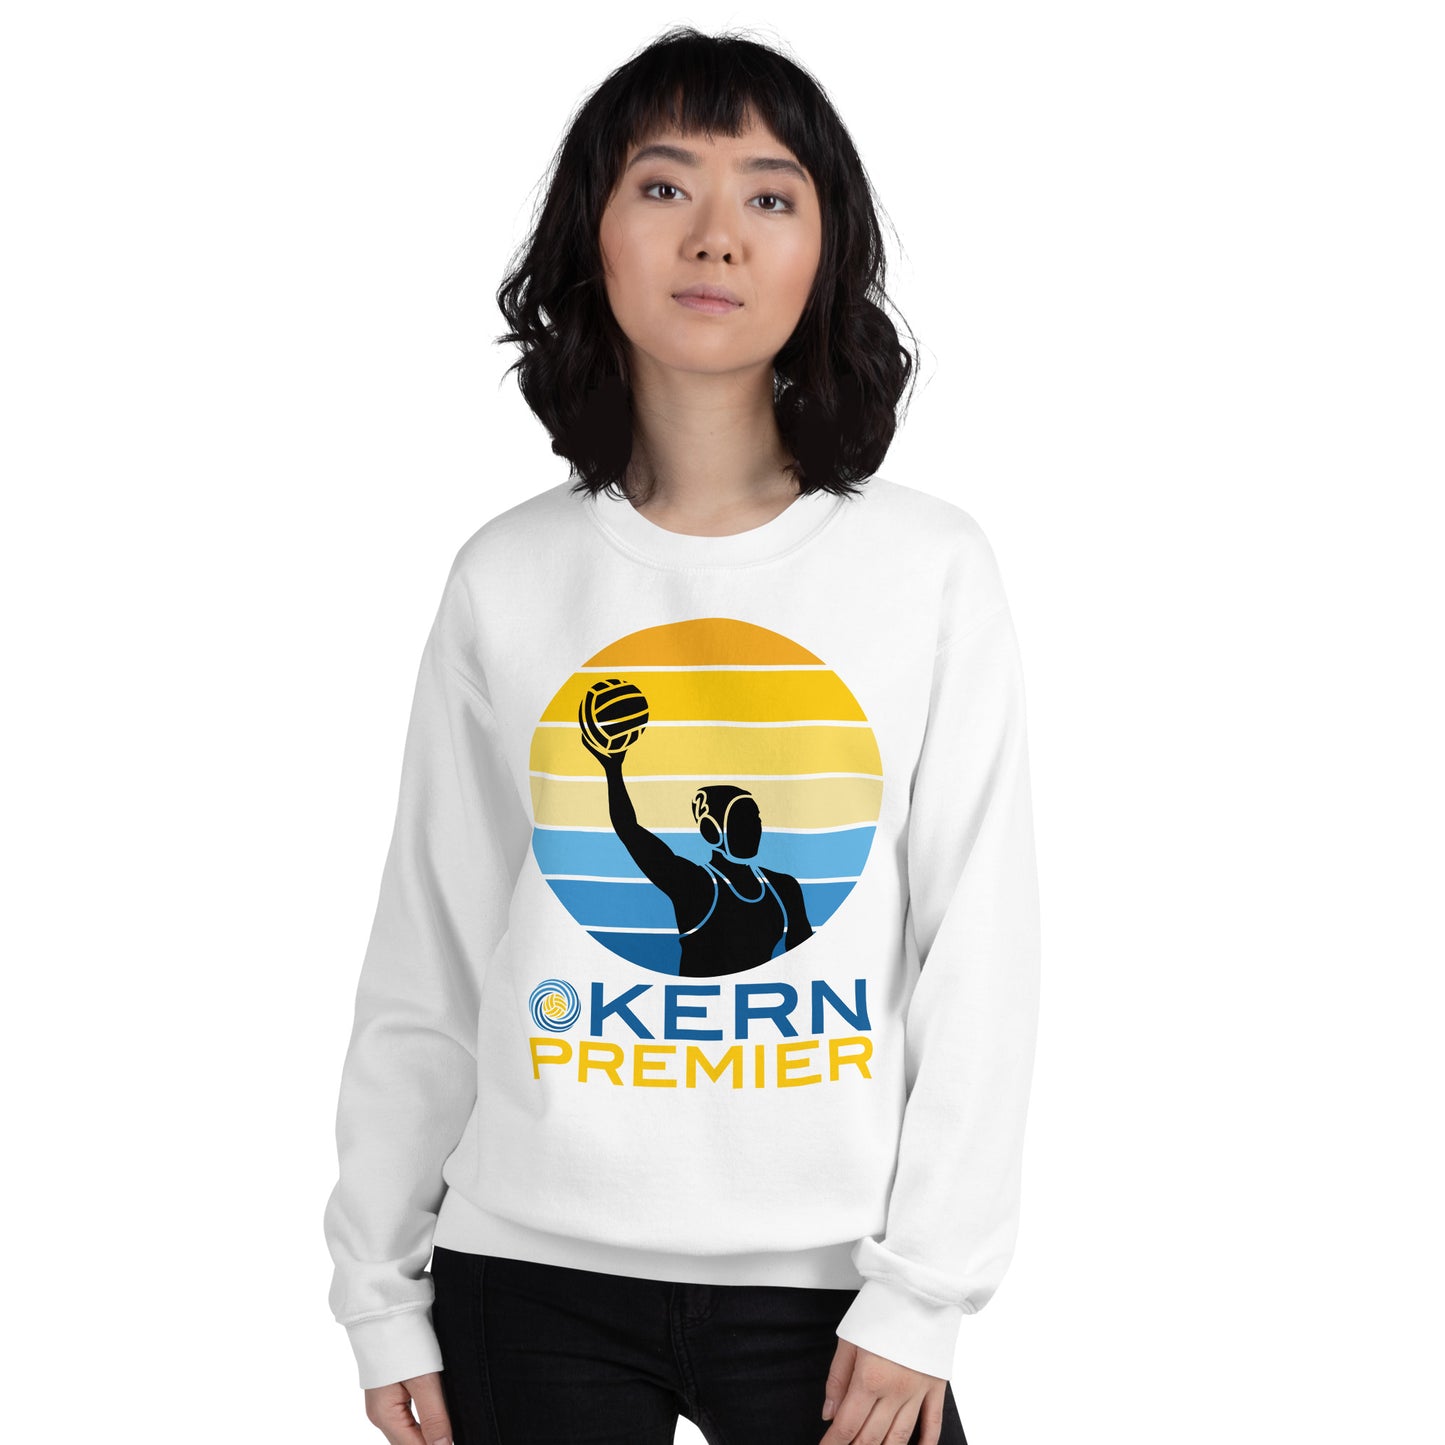 Kern Premier - 7 Color Circle with Female Silhouette with Logo on Bottom - Unisex Crew Neck Sweatshirt - Gildan 18000